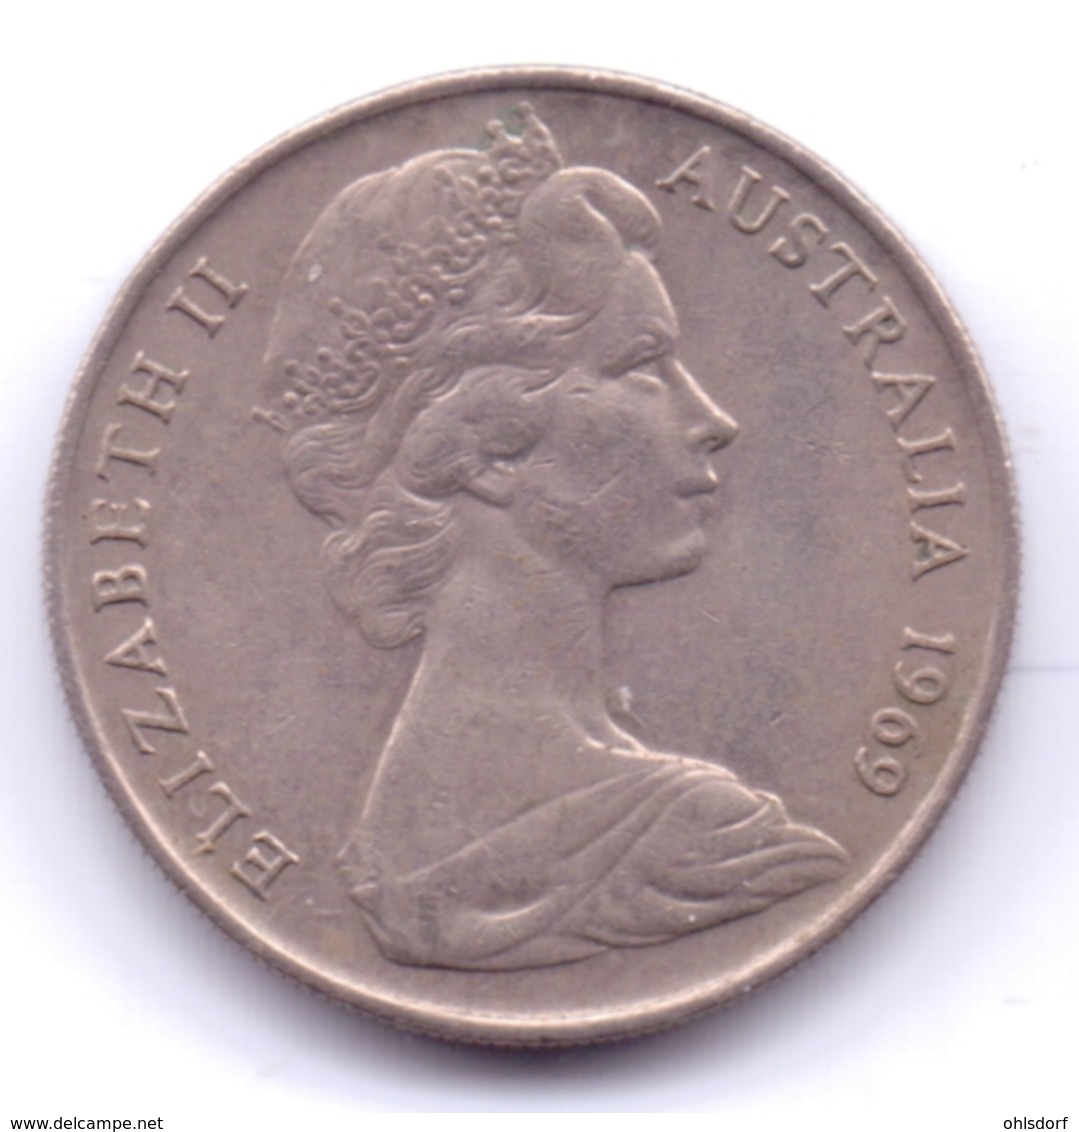 AUSTRALIA 1969: 10 Cents, KM 65 - 10 Cents